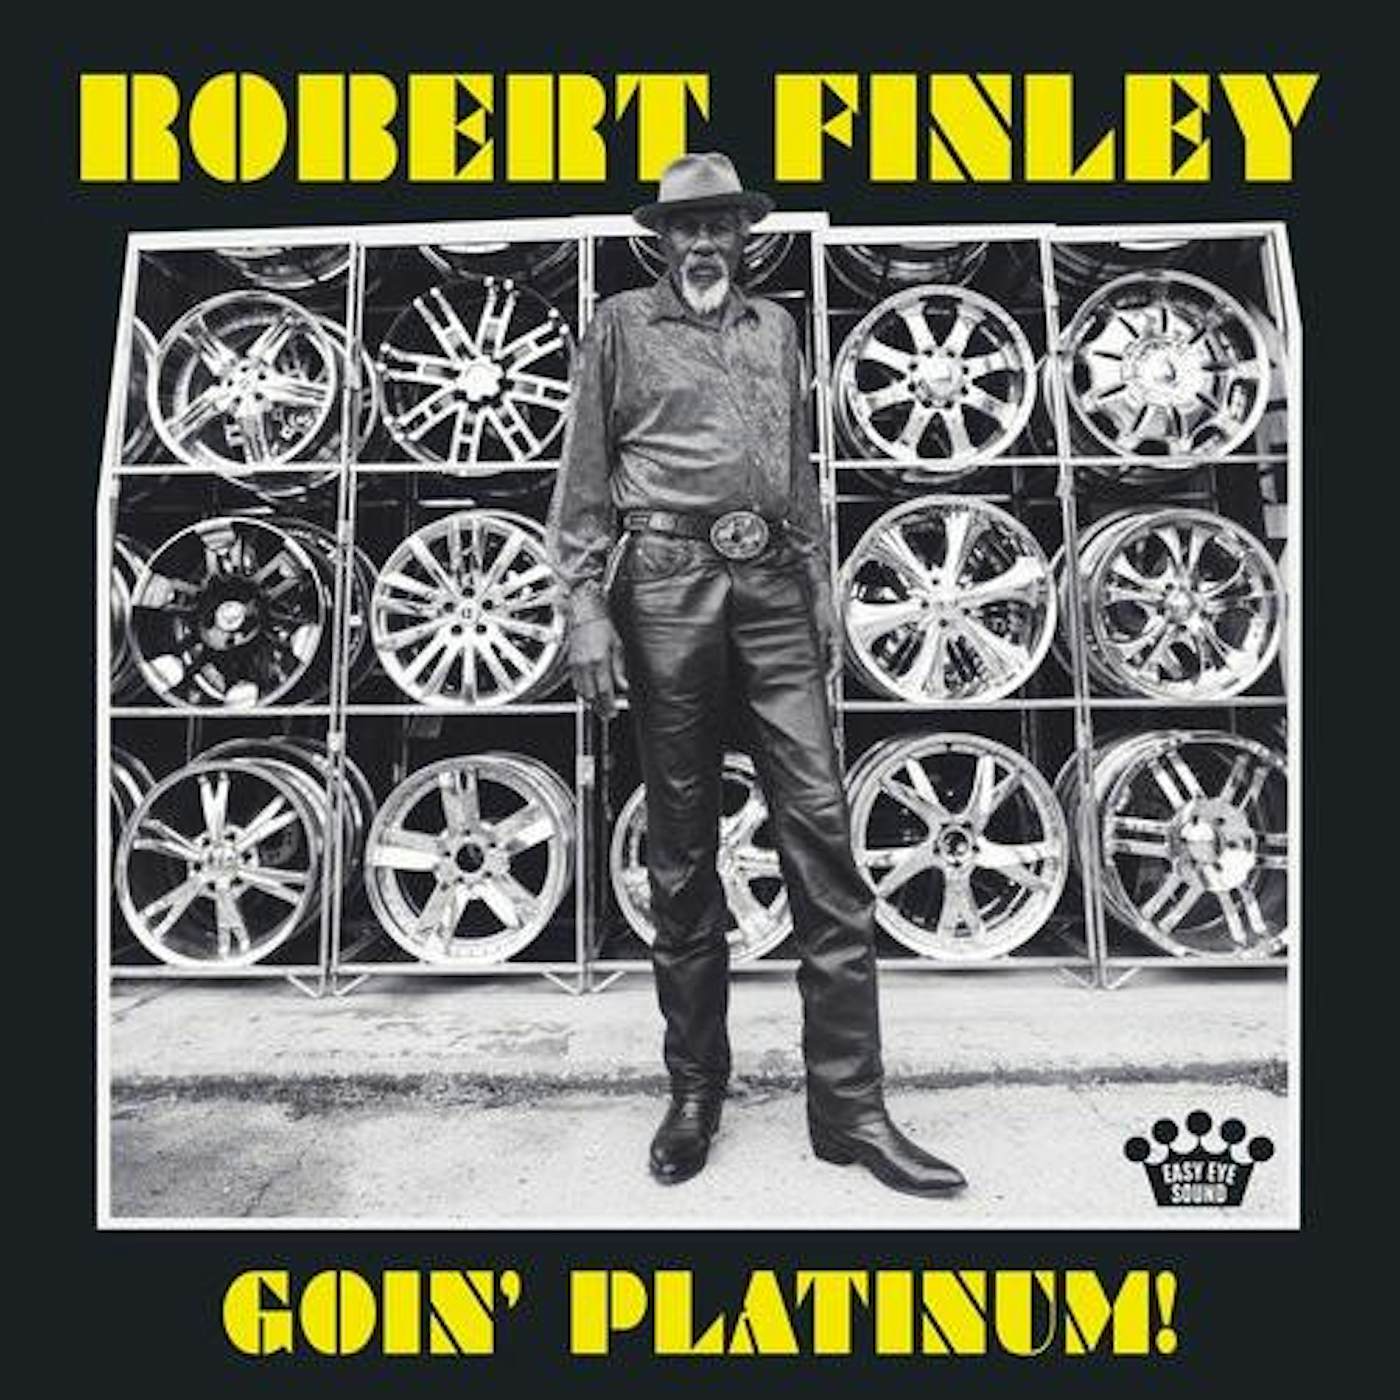 Robert Finley GOIN' PLATINUM Vinyl Record